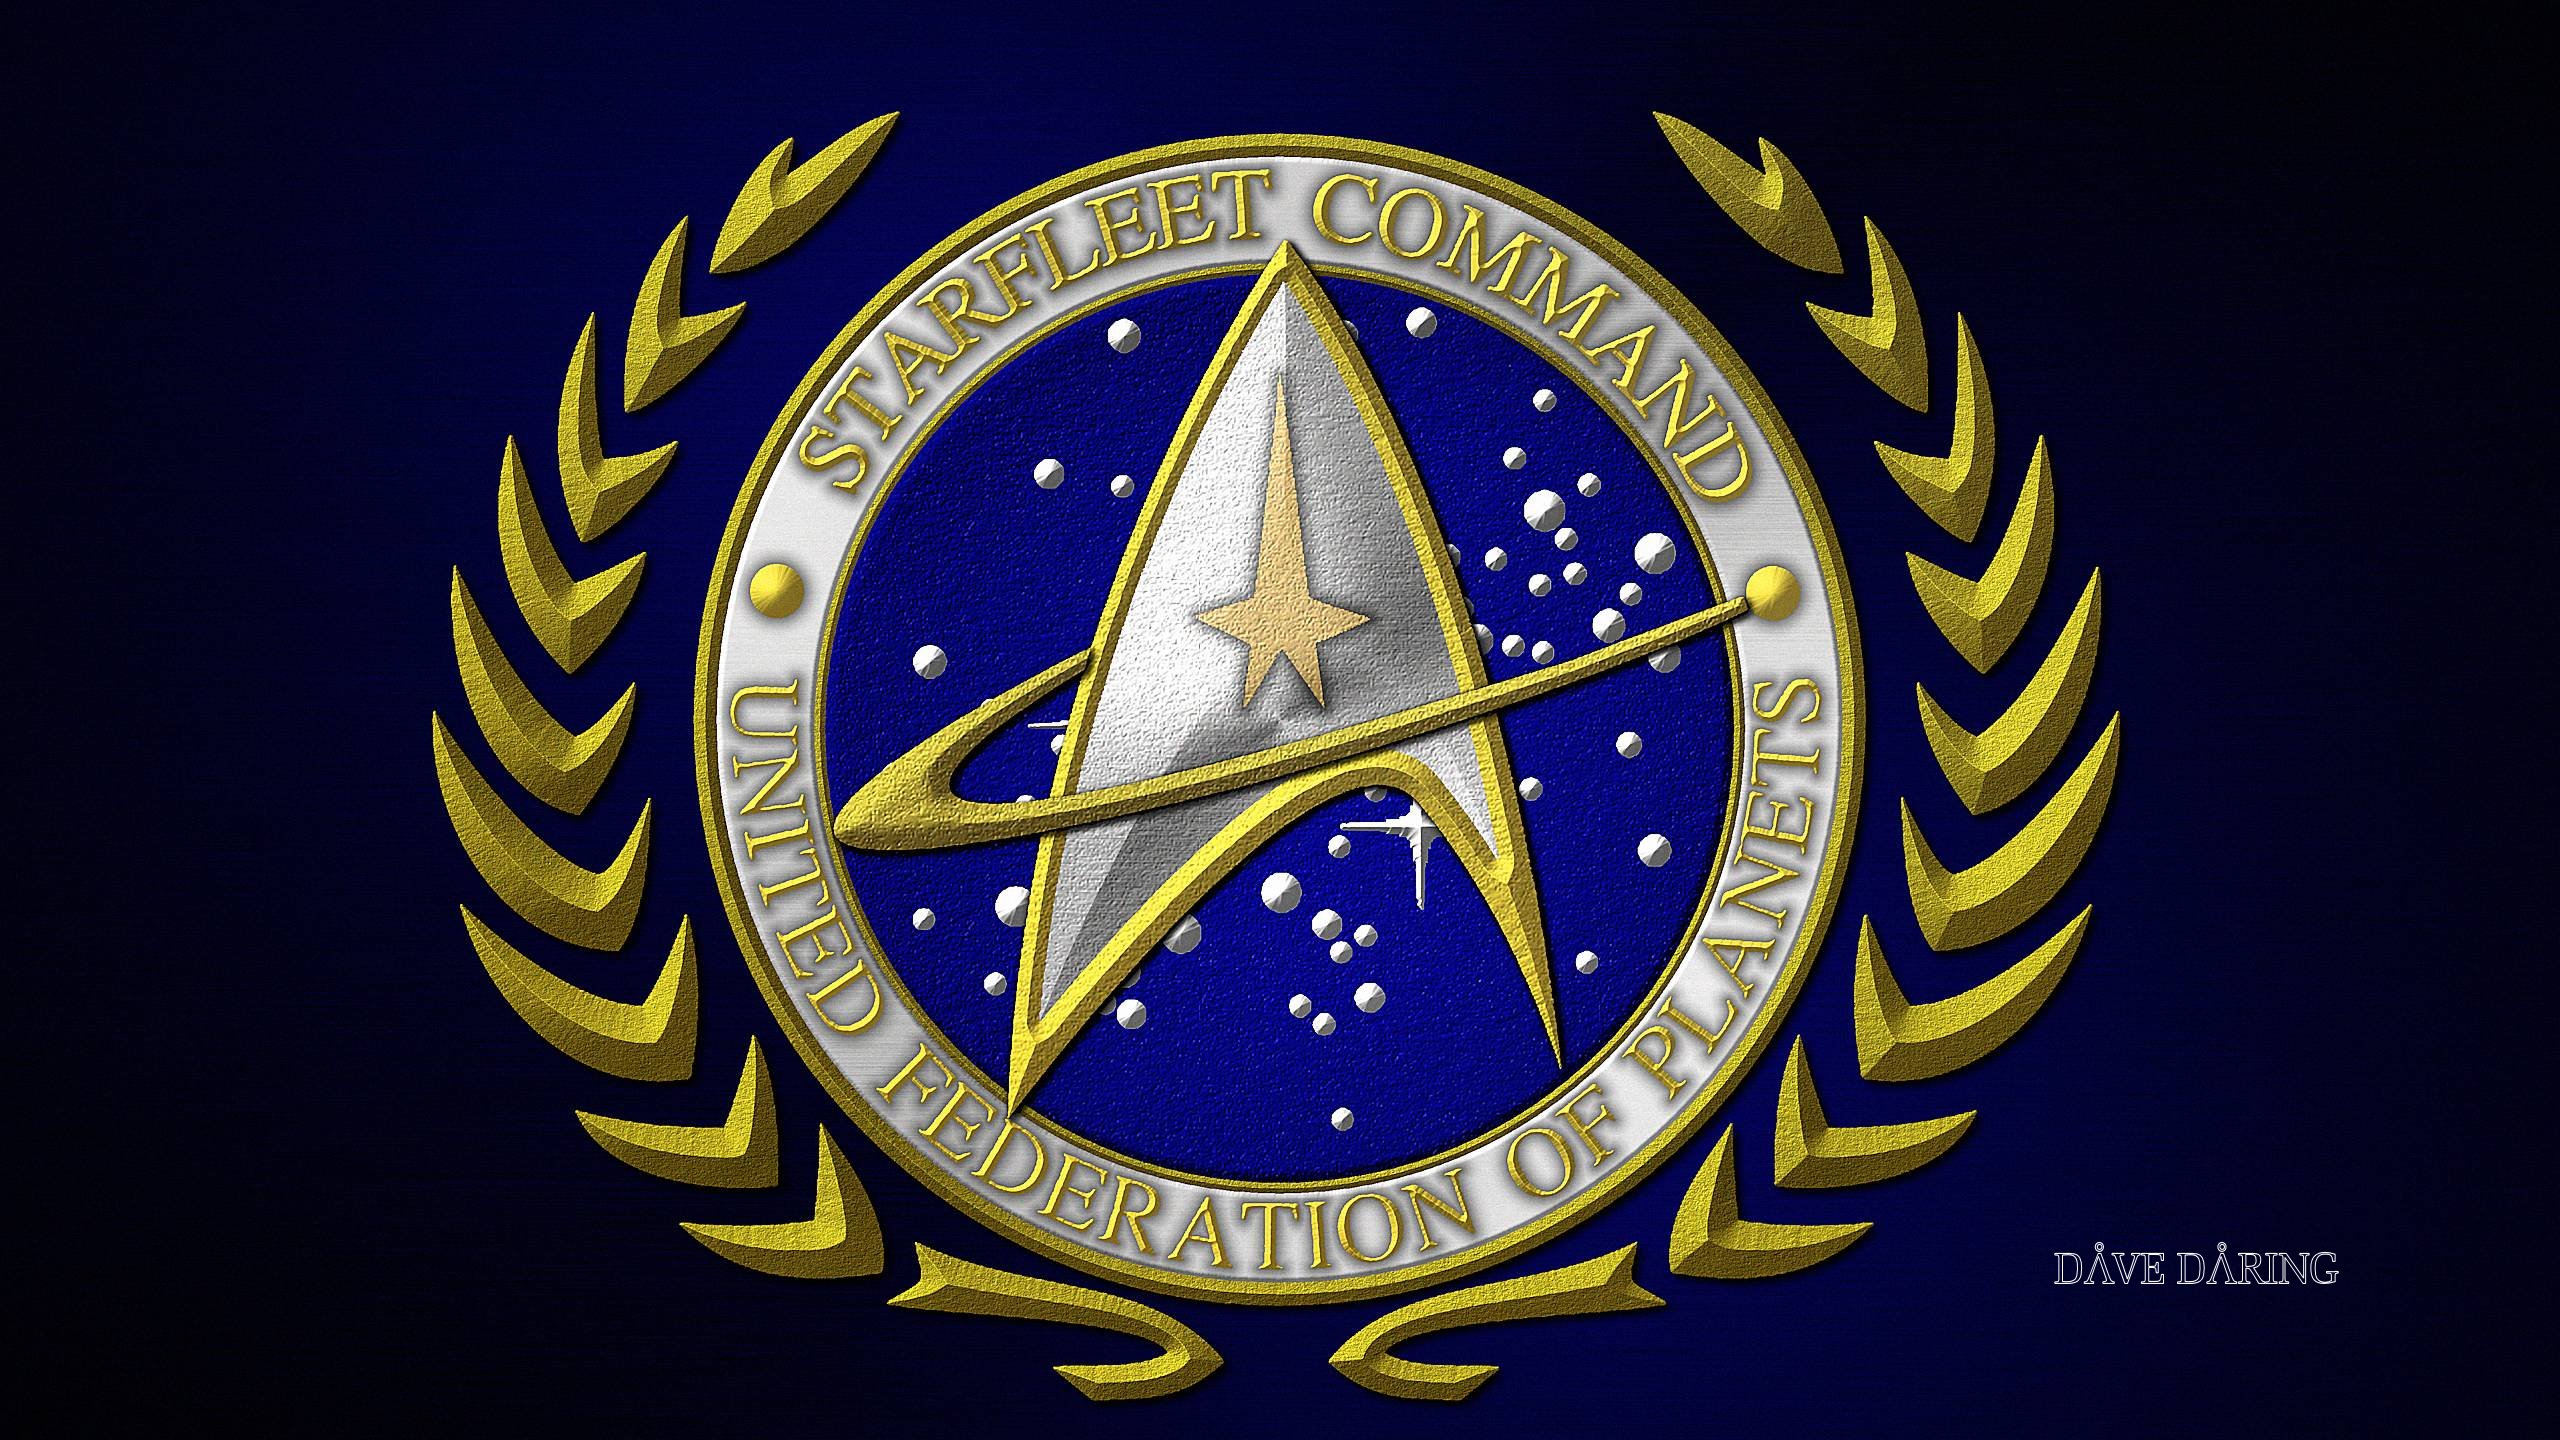 Star Trek Star Fleet Command Great Seal by Dave Daring 2560x1440